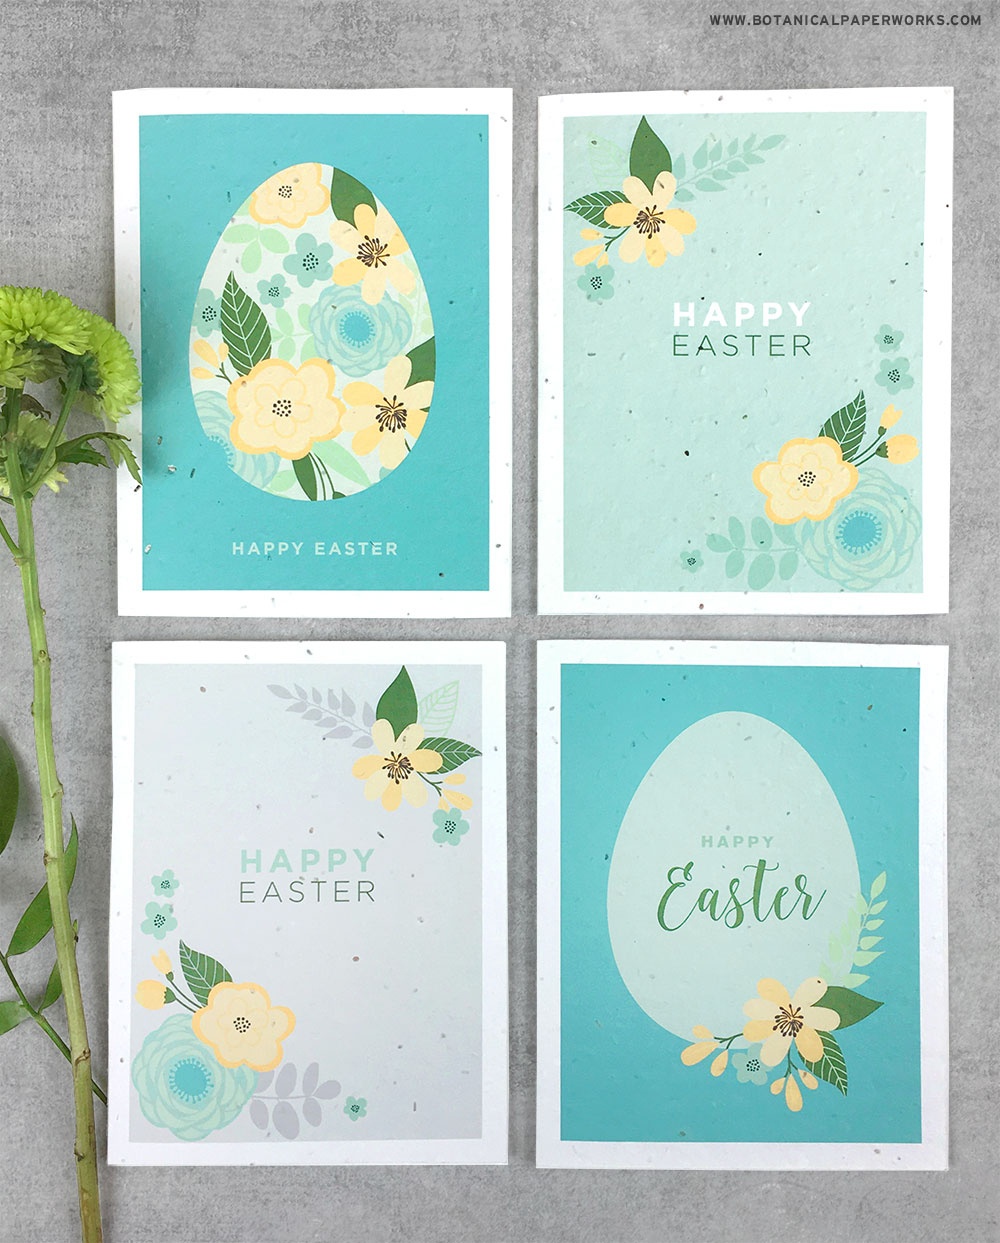 Free Printable} Easter Cards | Blog | Botanical Paperworks - Printable Easter Greeting Cards Free